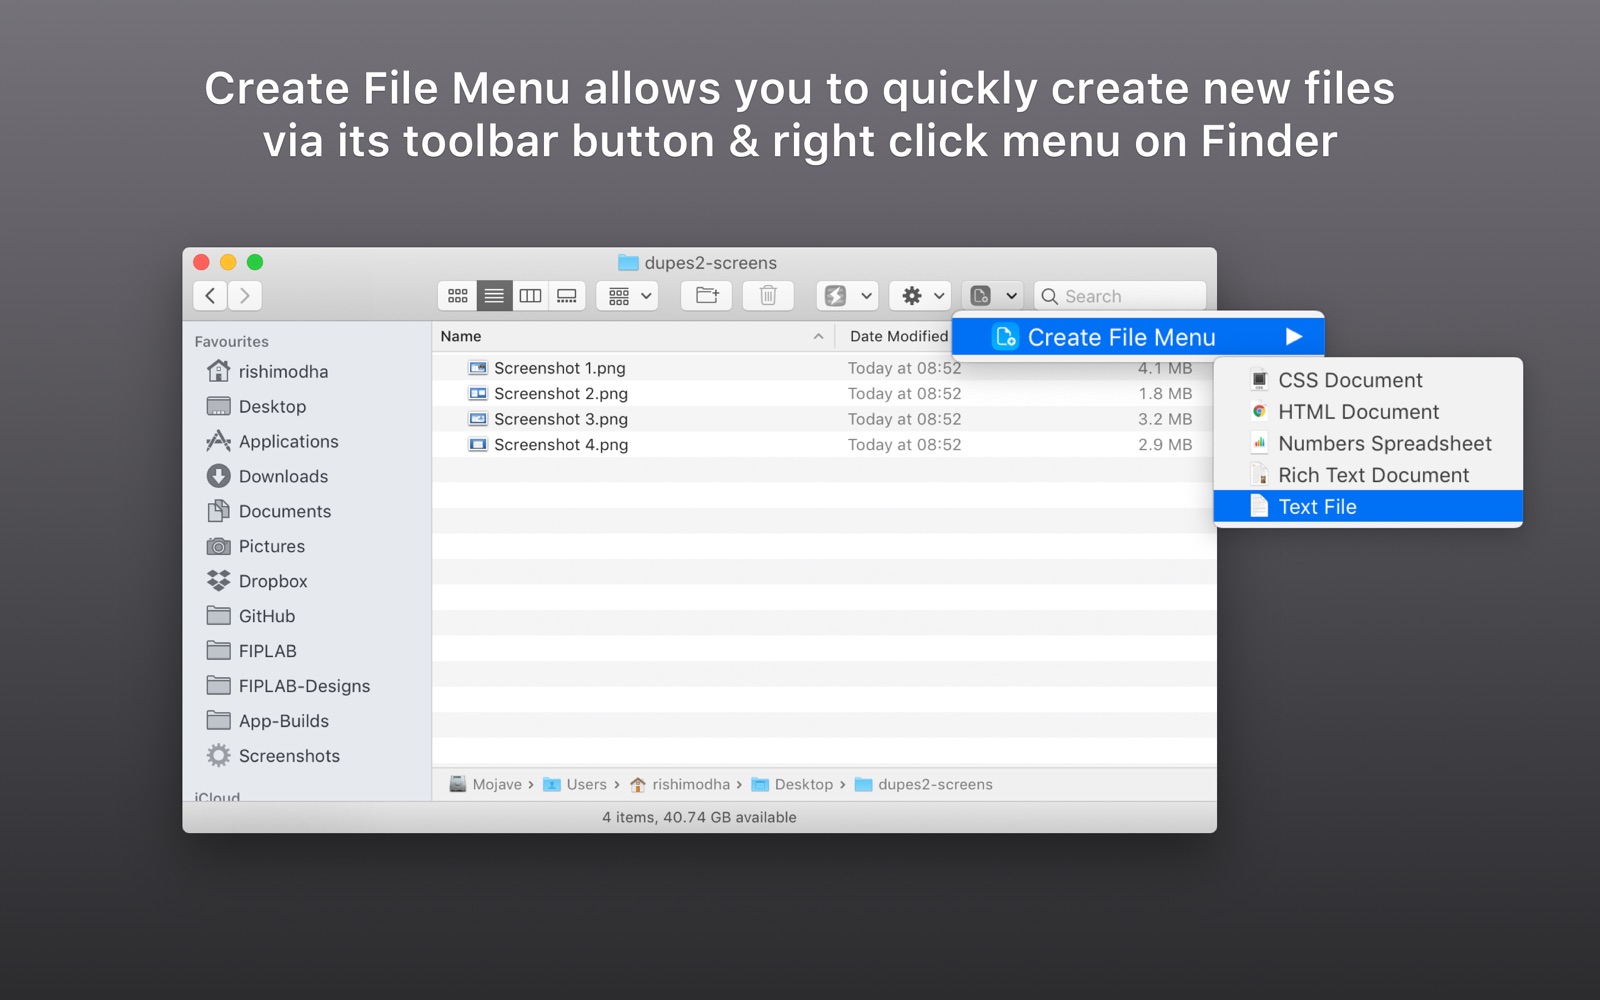 Create File Menu 1.0 : Main Window